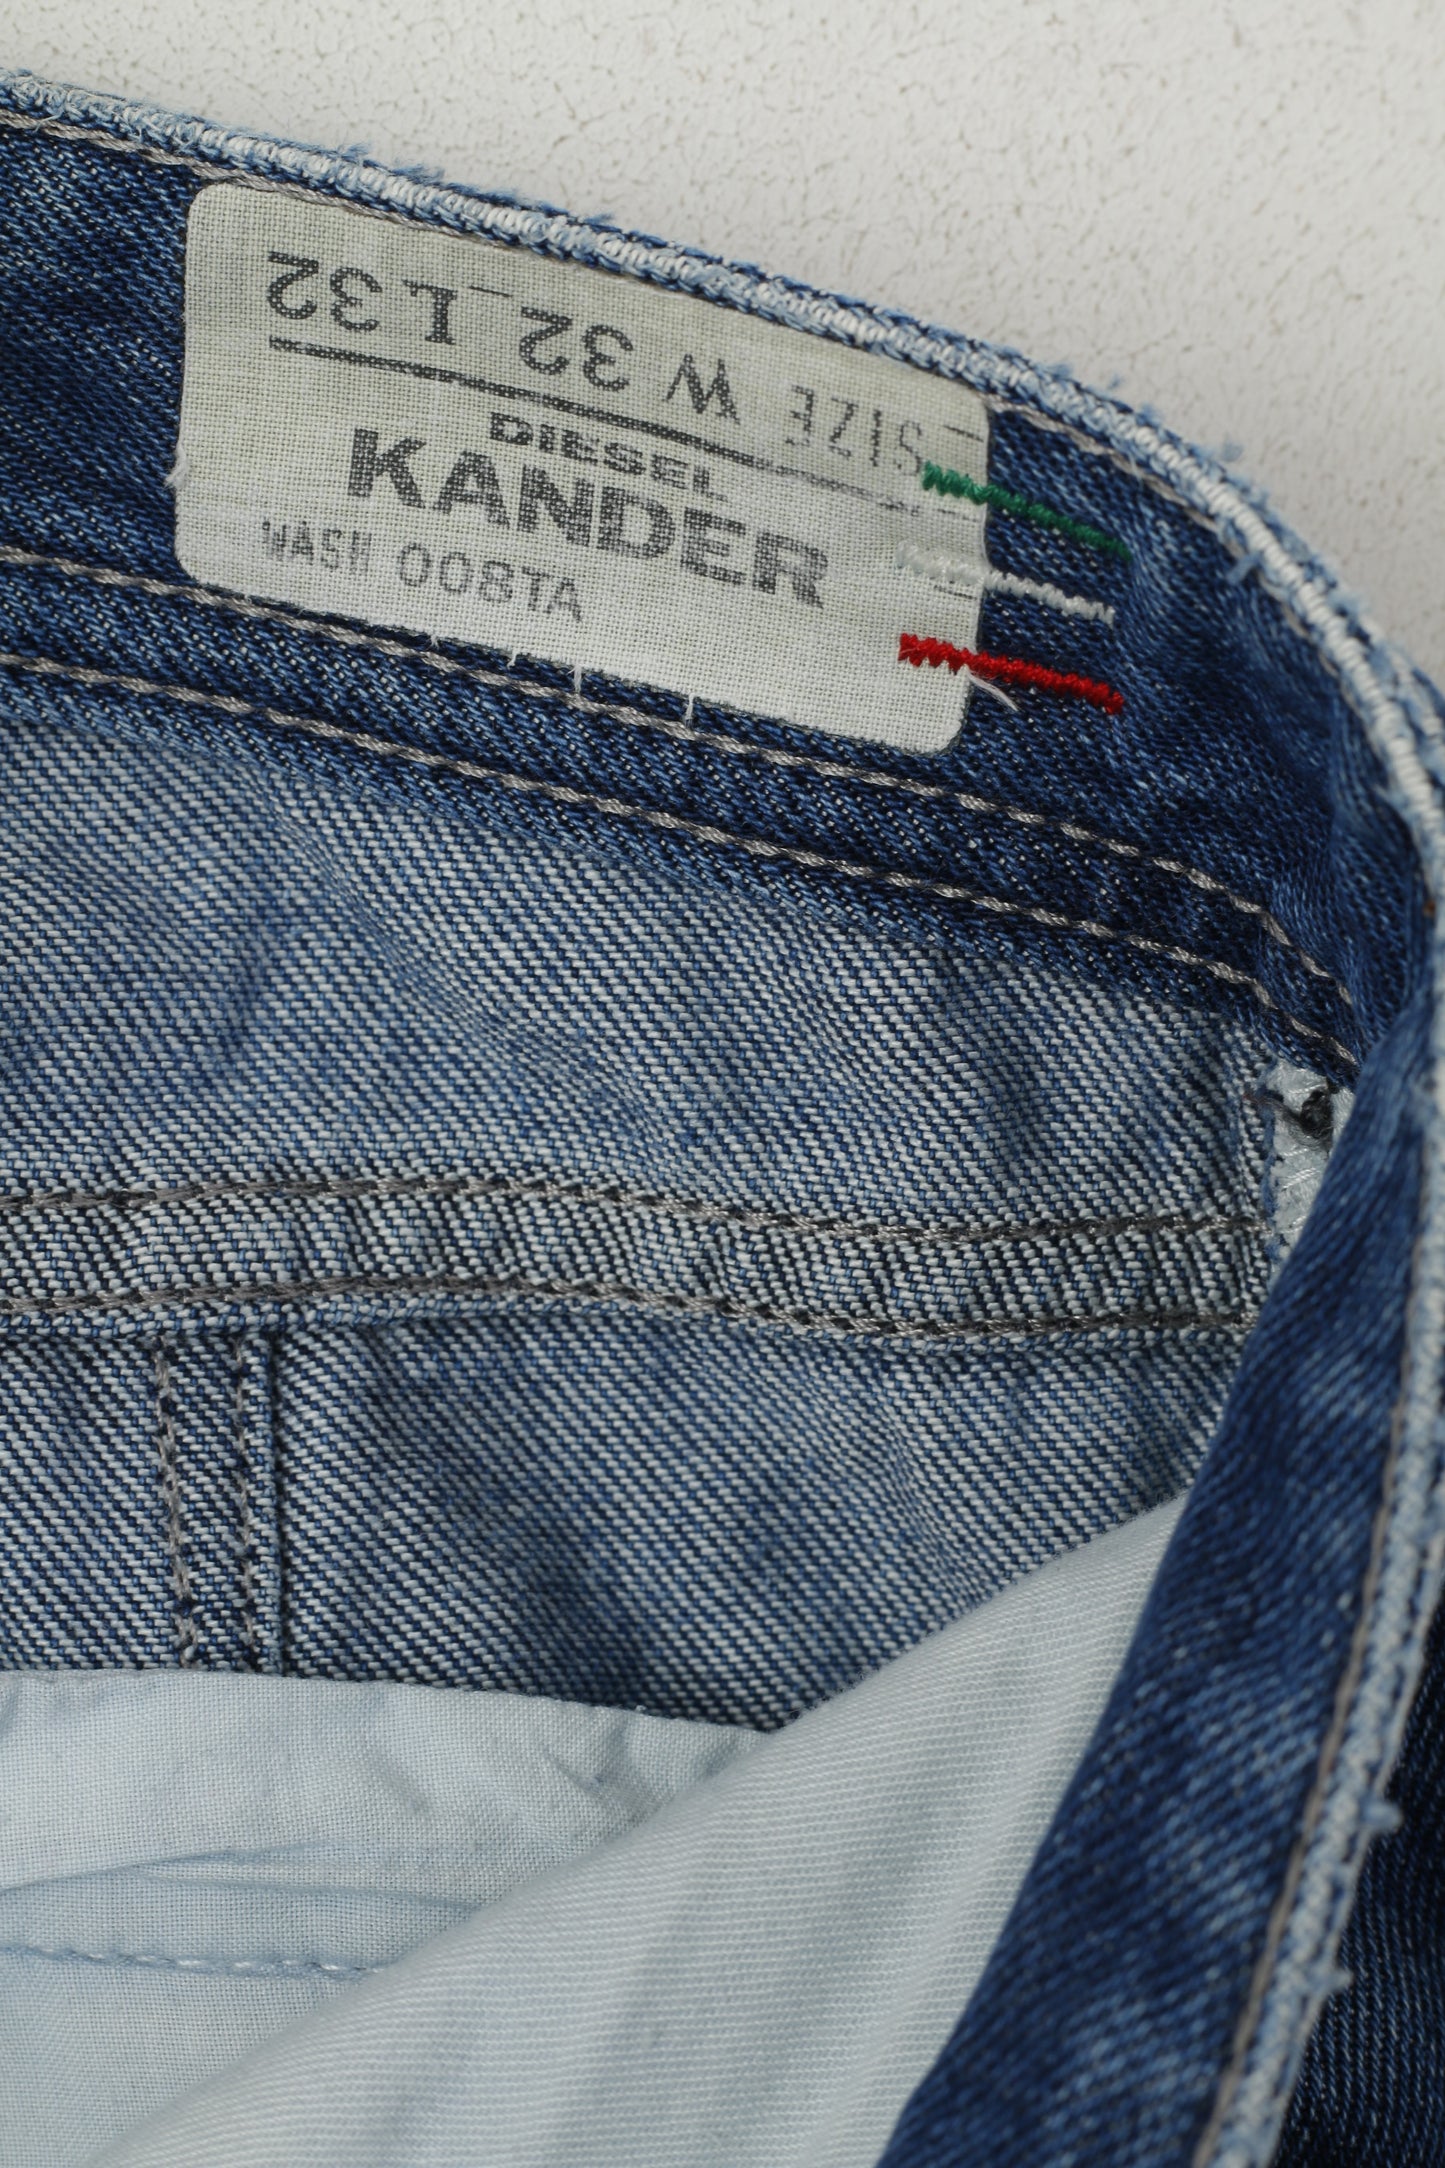 Diesel Industry Kander Men 32 Trousers Blue Denim Cotton Made in Italy Pants